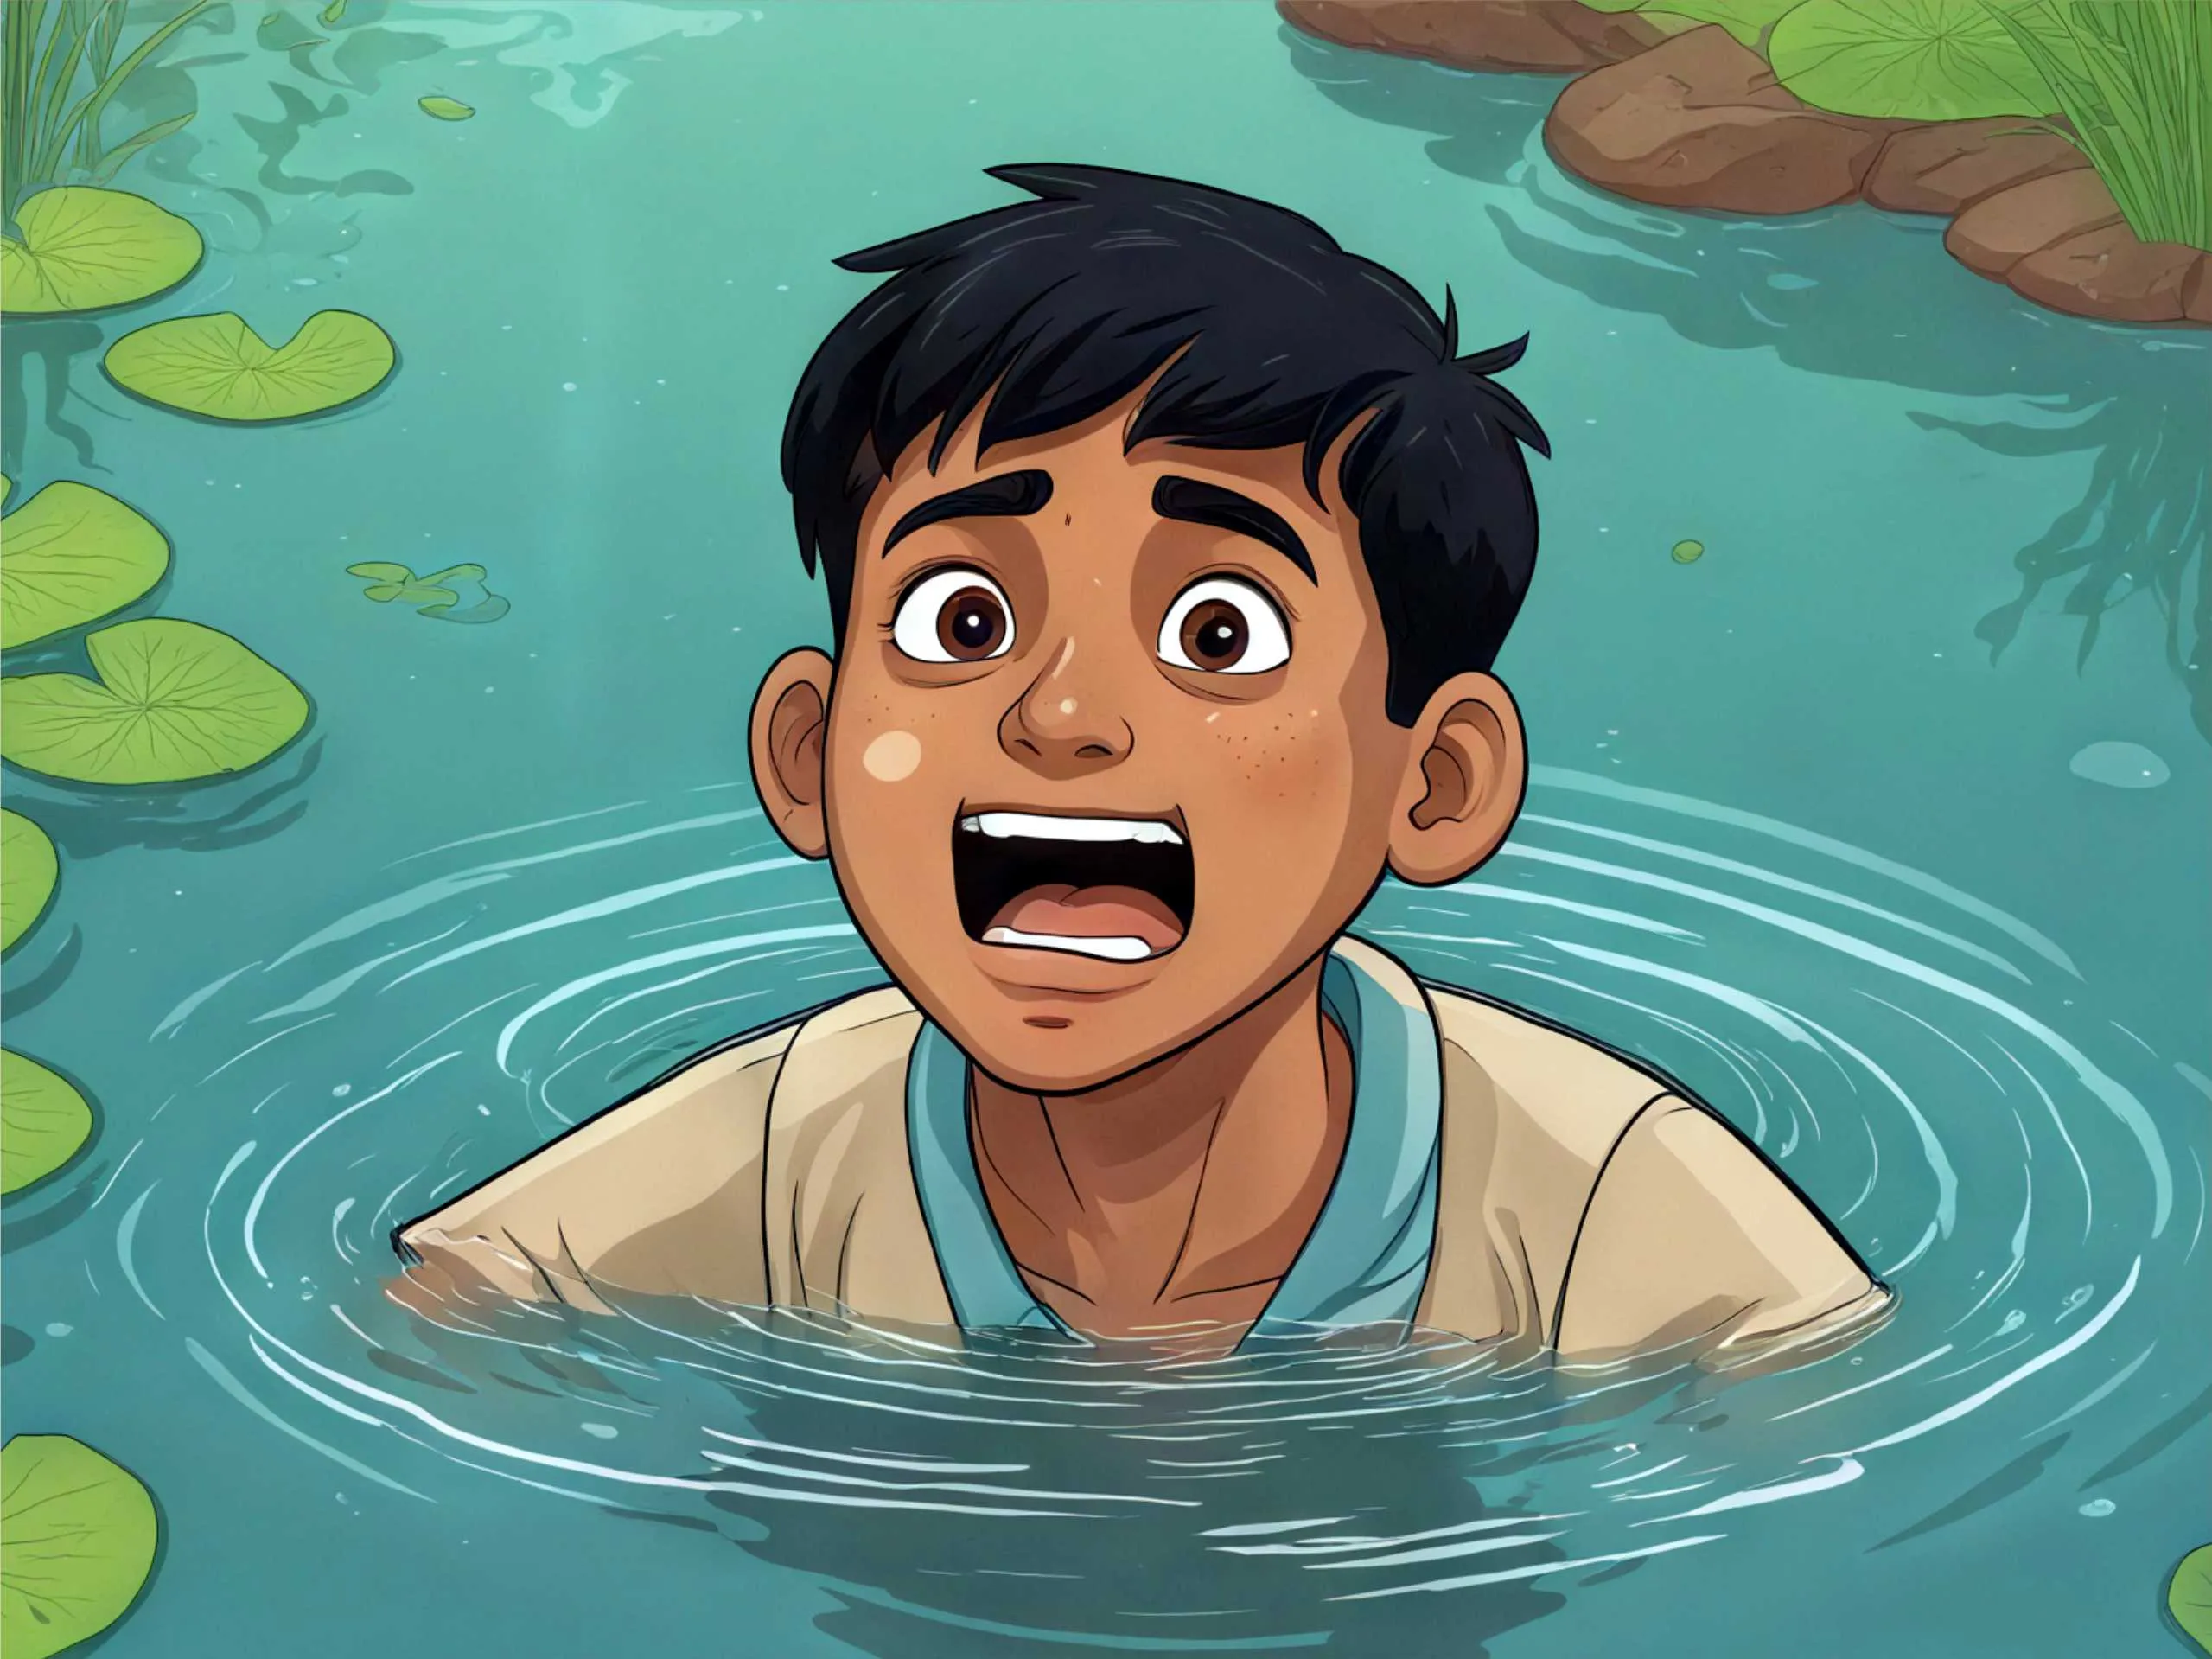 cartoon image of a school boy drowning in a pond